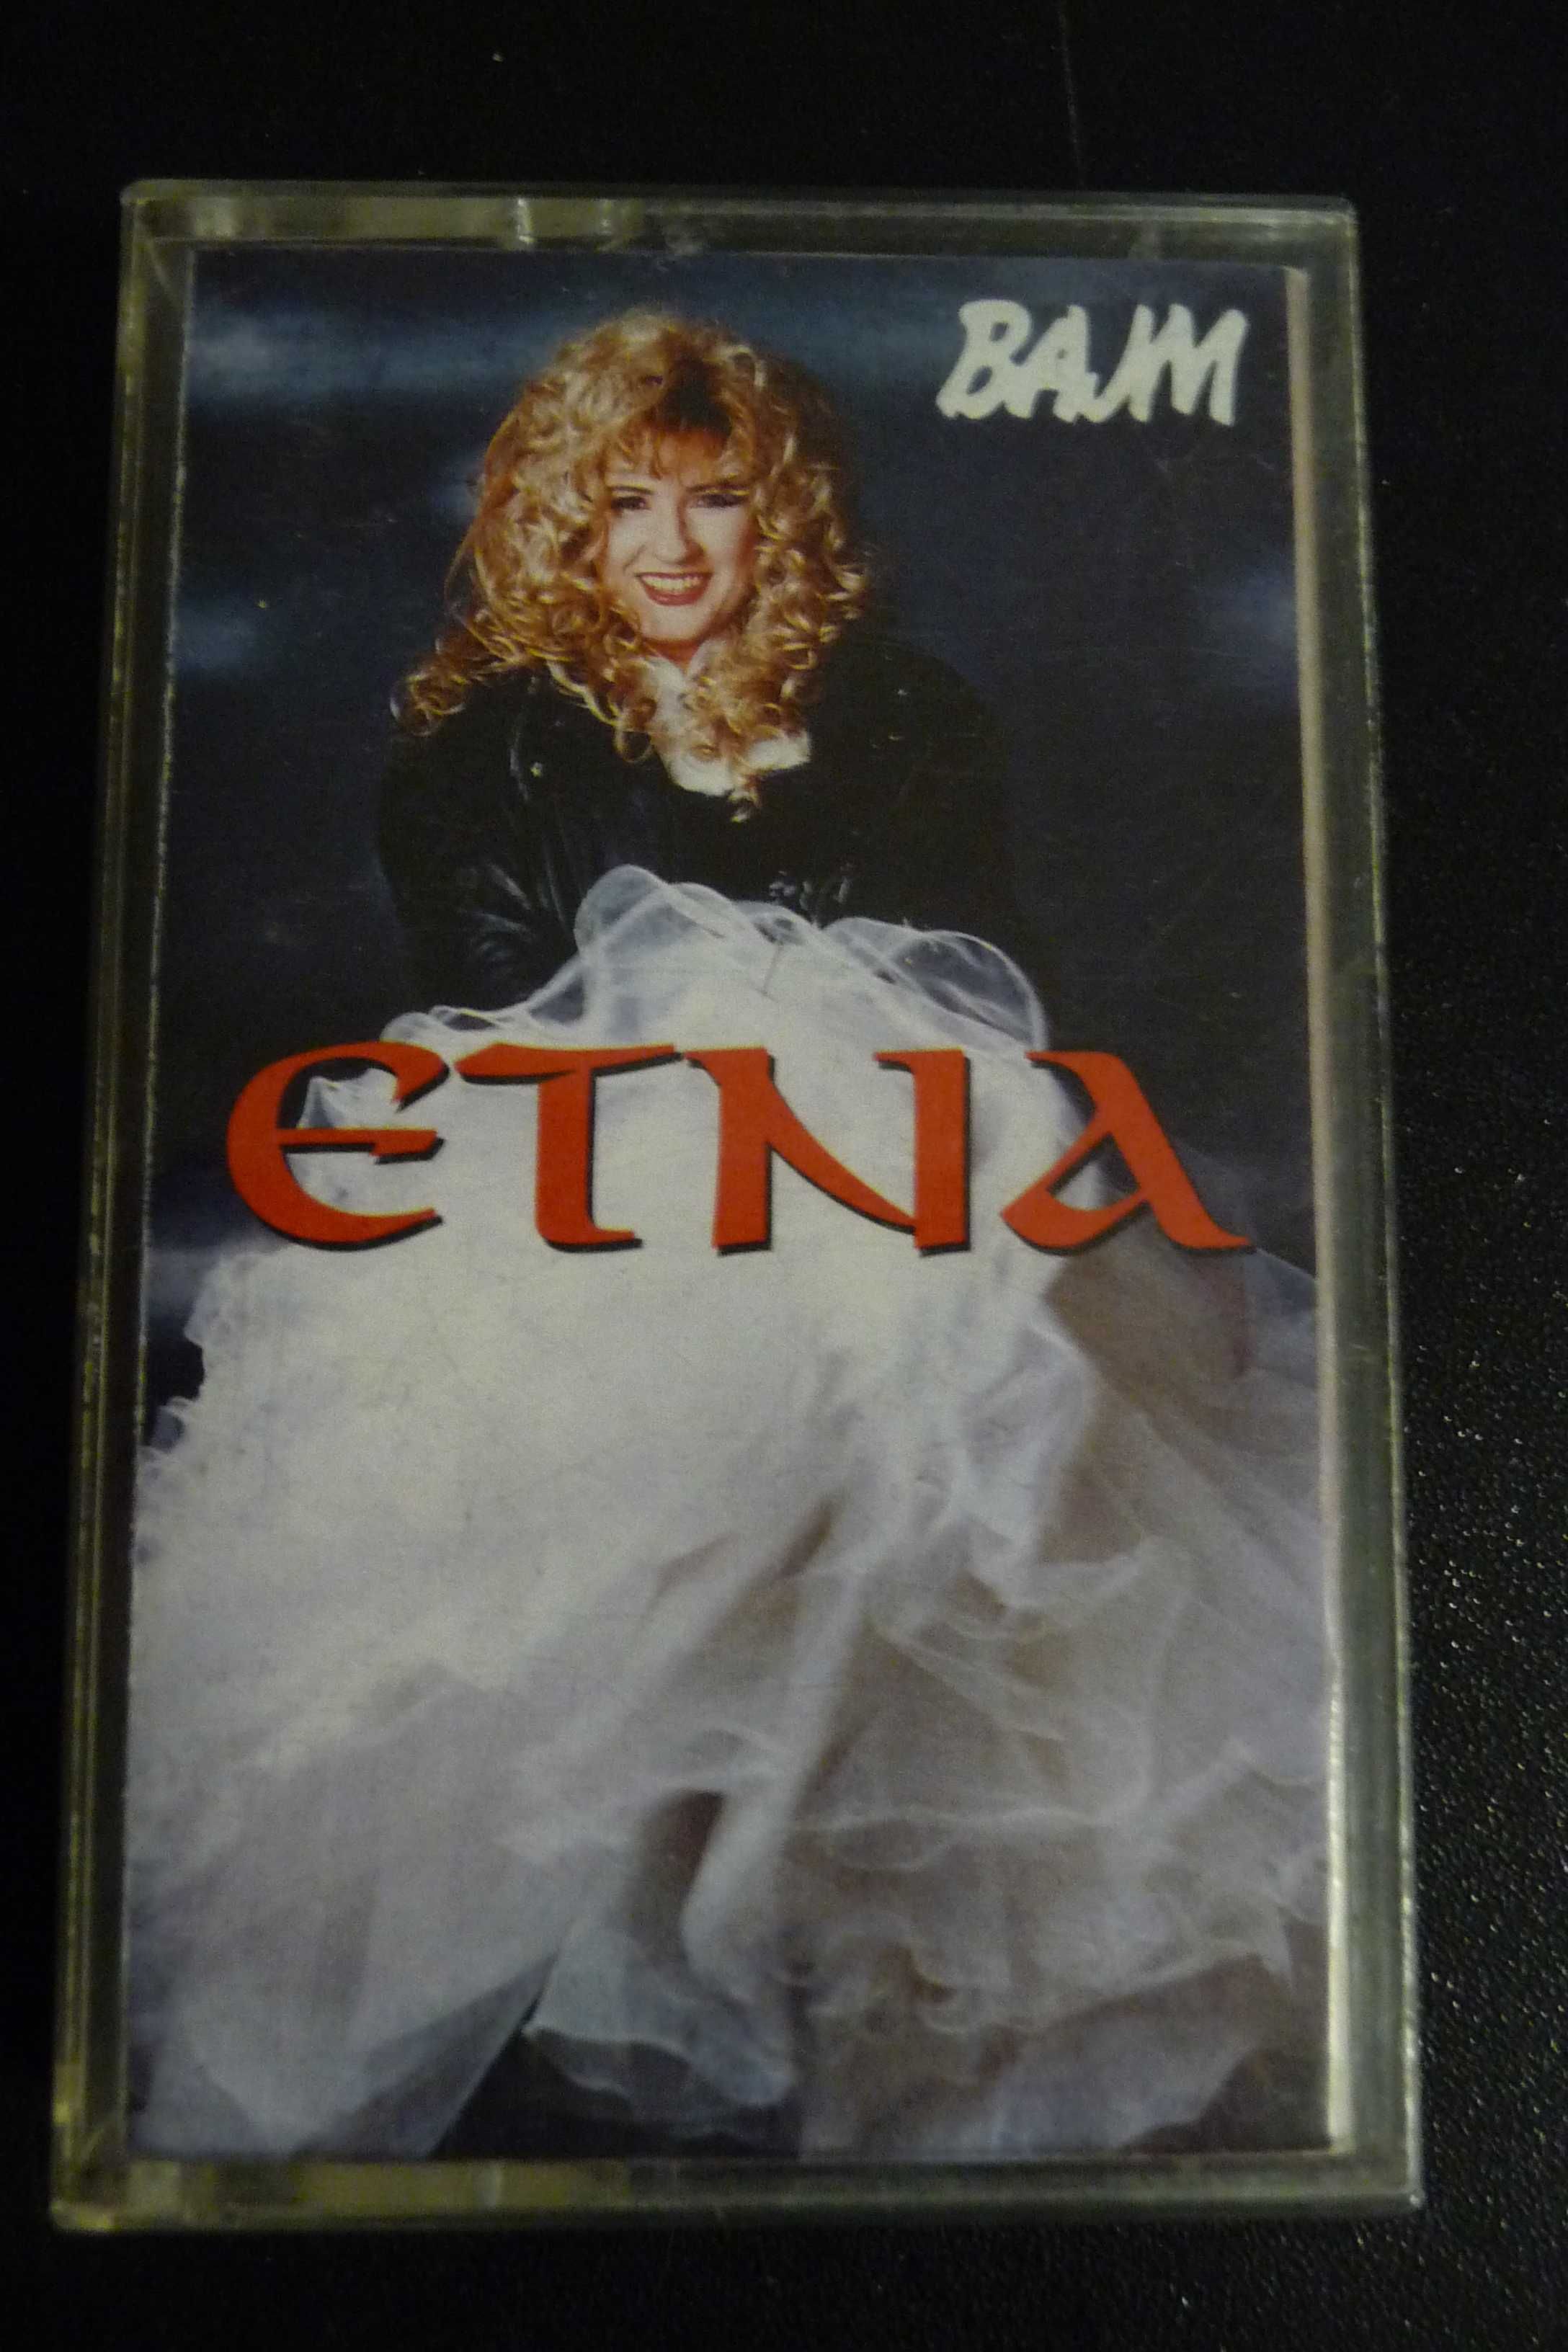 BAJM - Etna - kaseta magnetofonowa